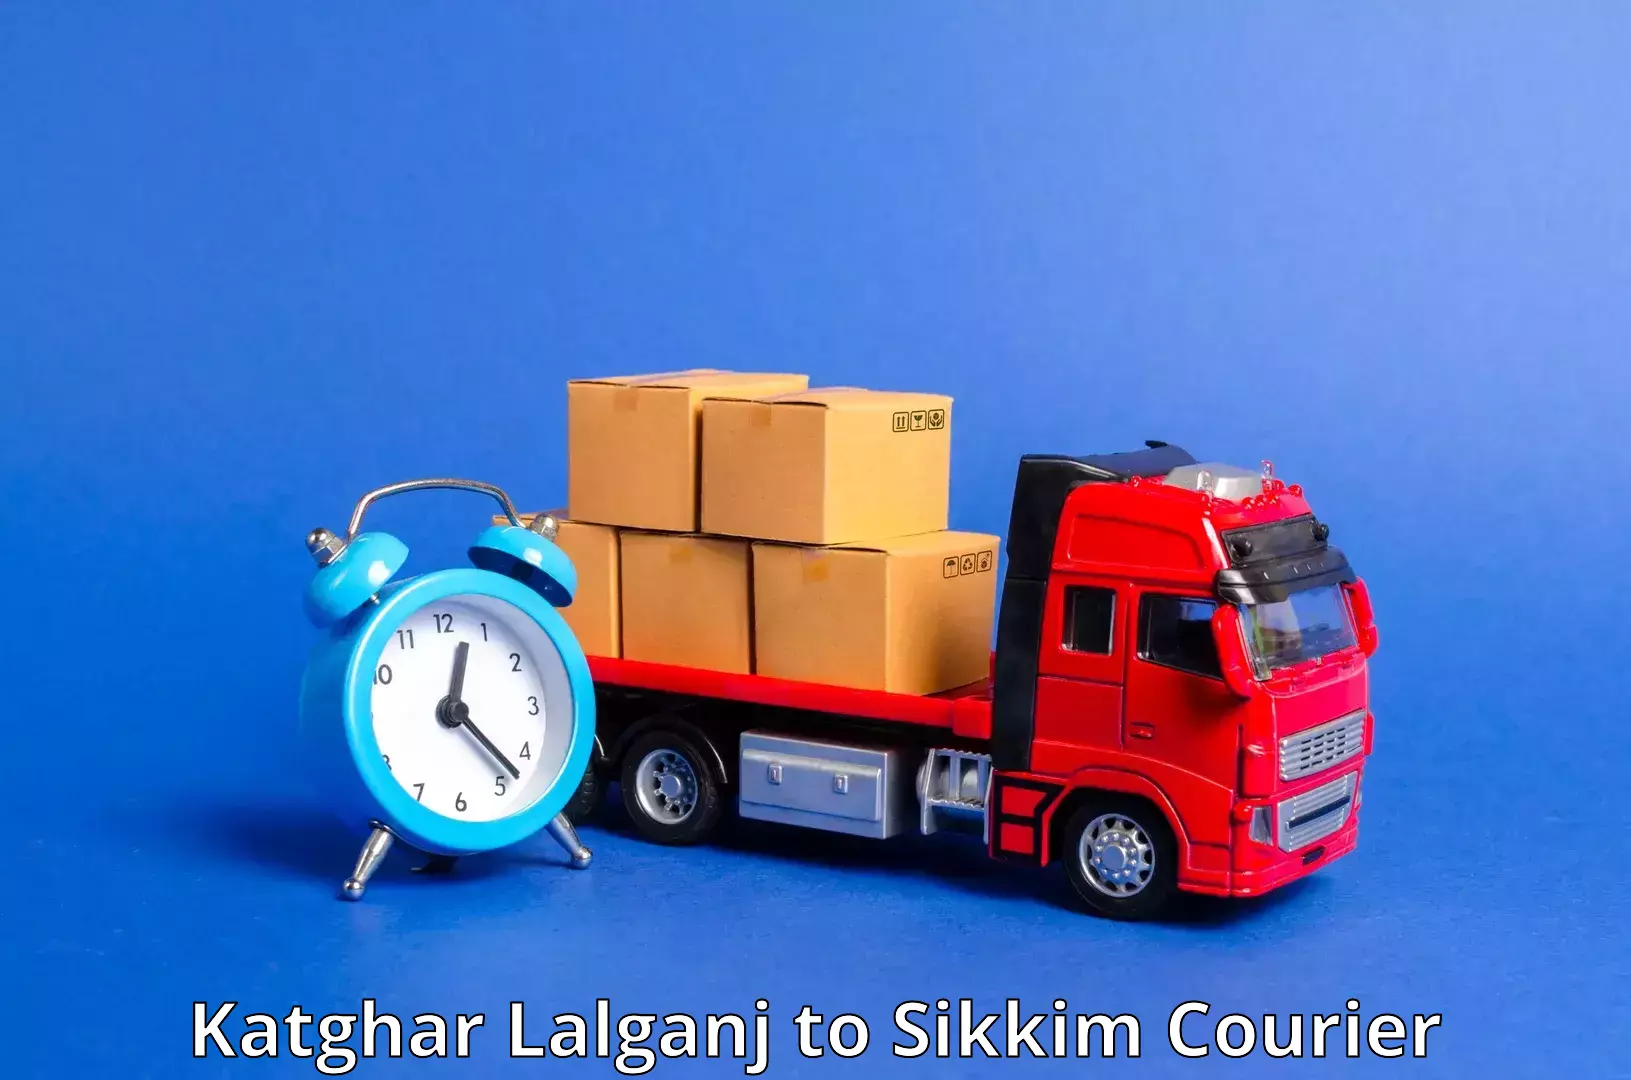 Professional parcel services in Katghar Lalganj to East Sikkim